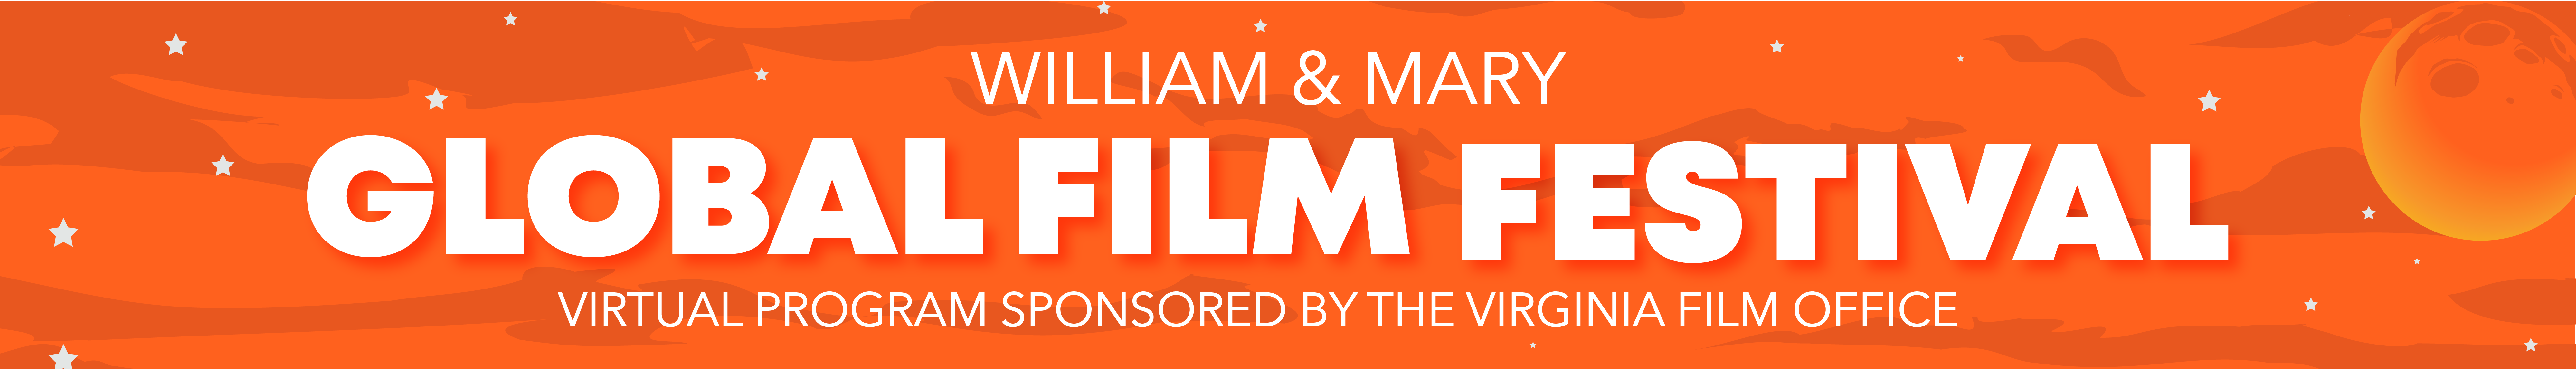 2021 William & Mary Global Film Festival